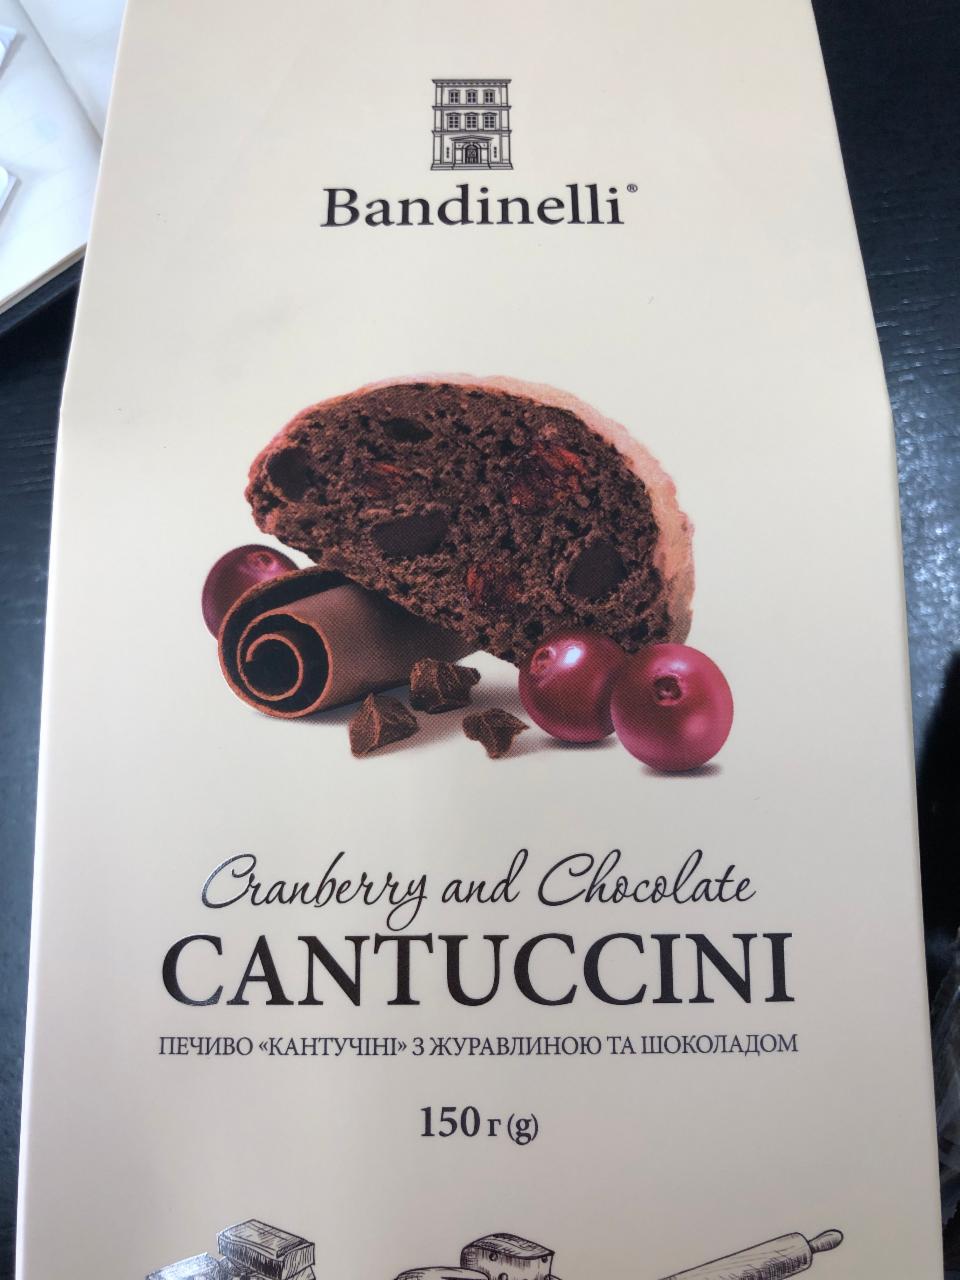 Фото - Печенье с клюквой и шоколадом Кантучини Cantuccini Bandinelli